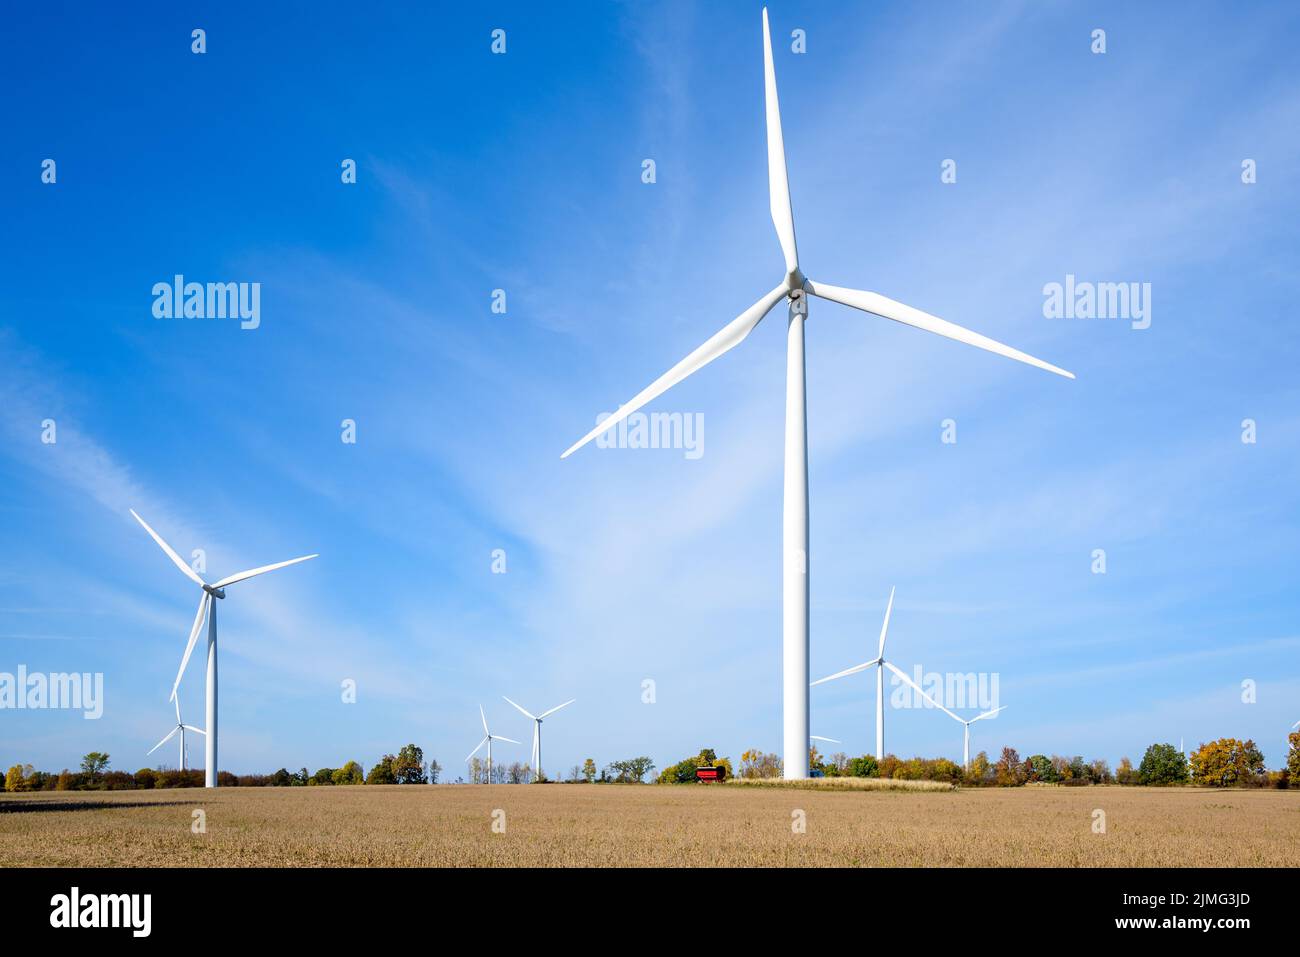 Tall wind turbines in a wheat field under blue sky in autumn Stock Photo